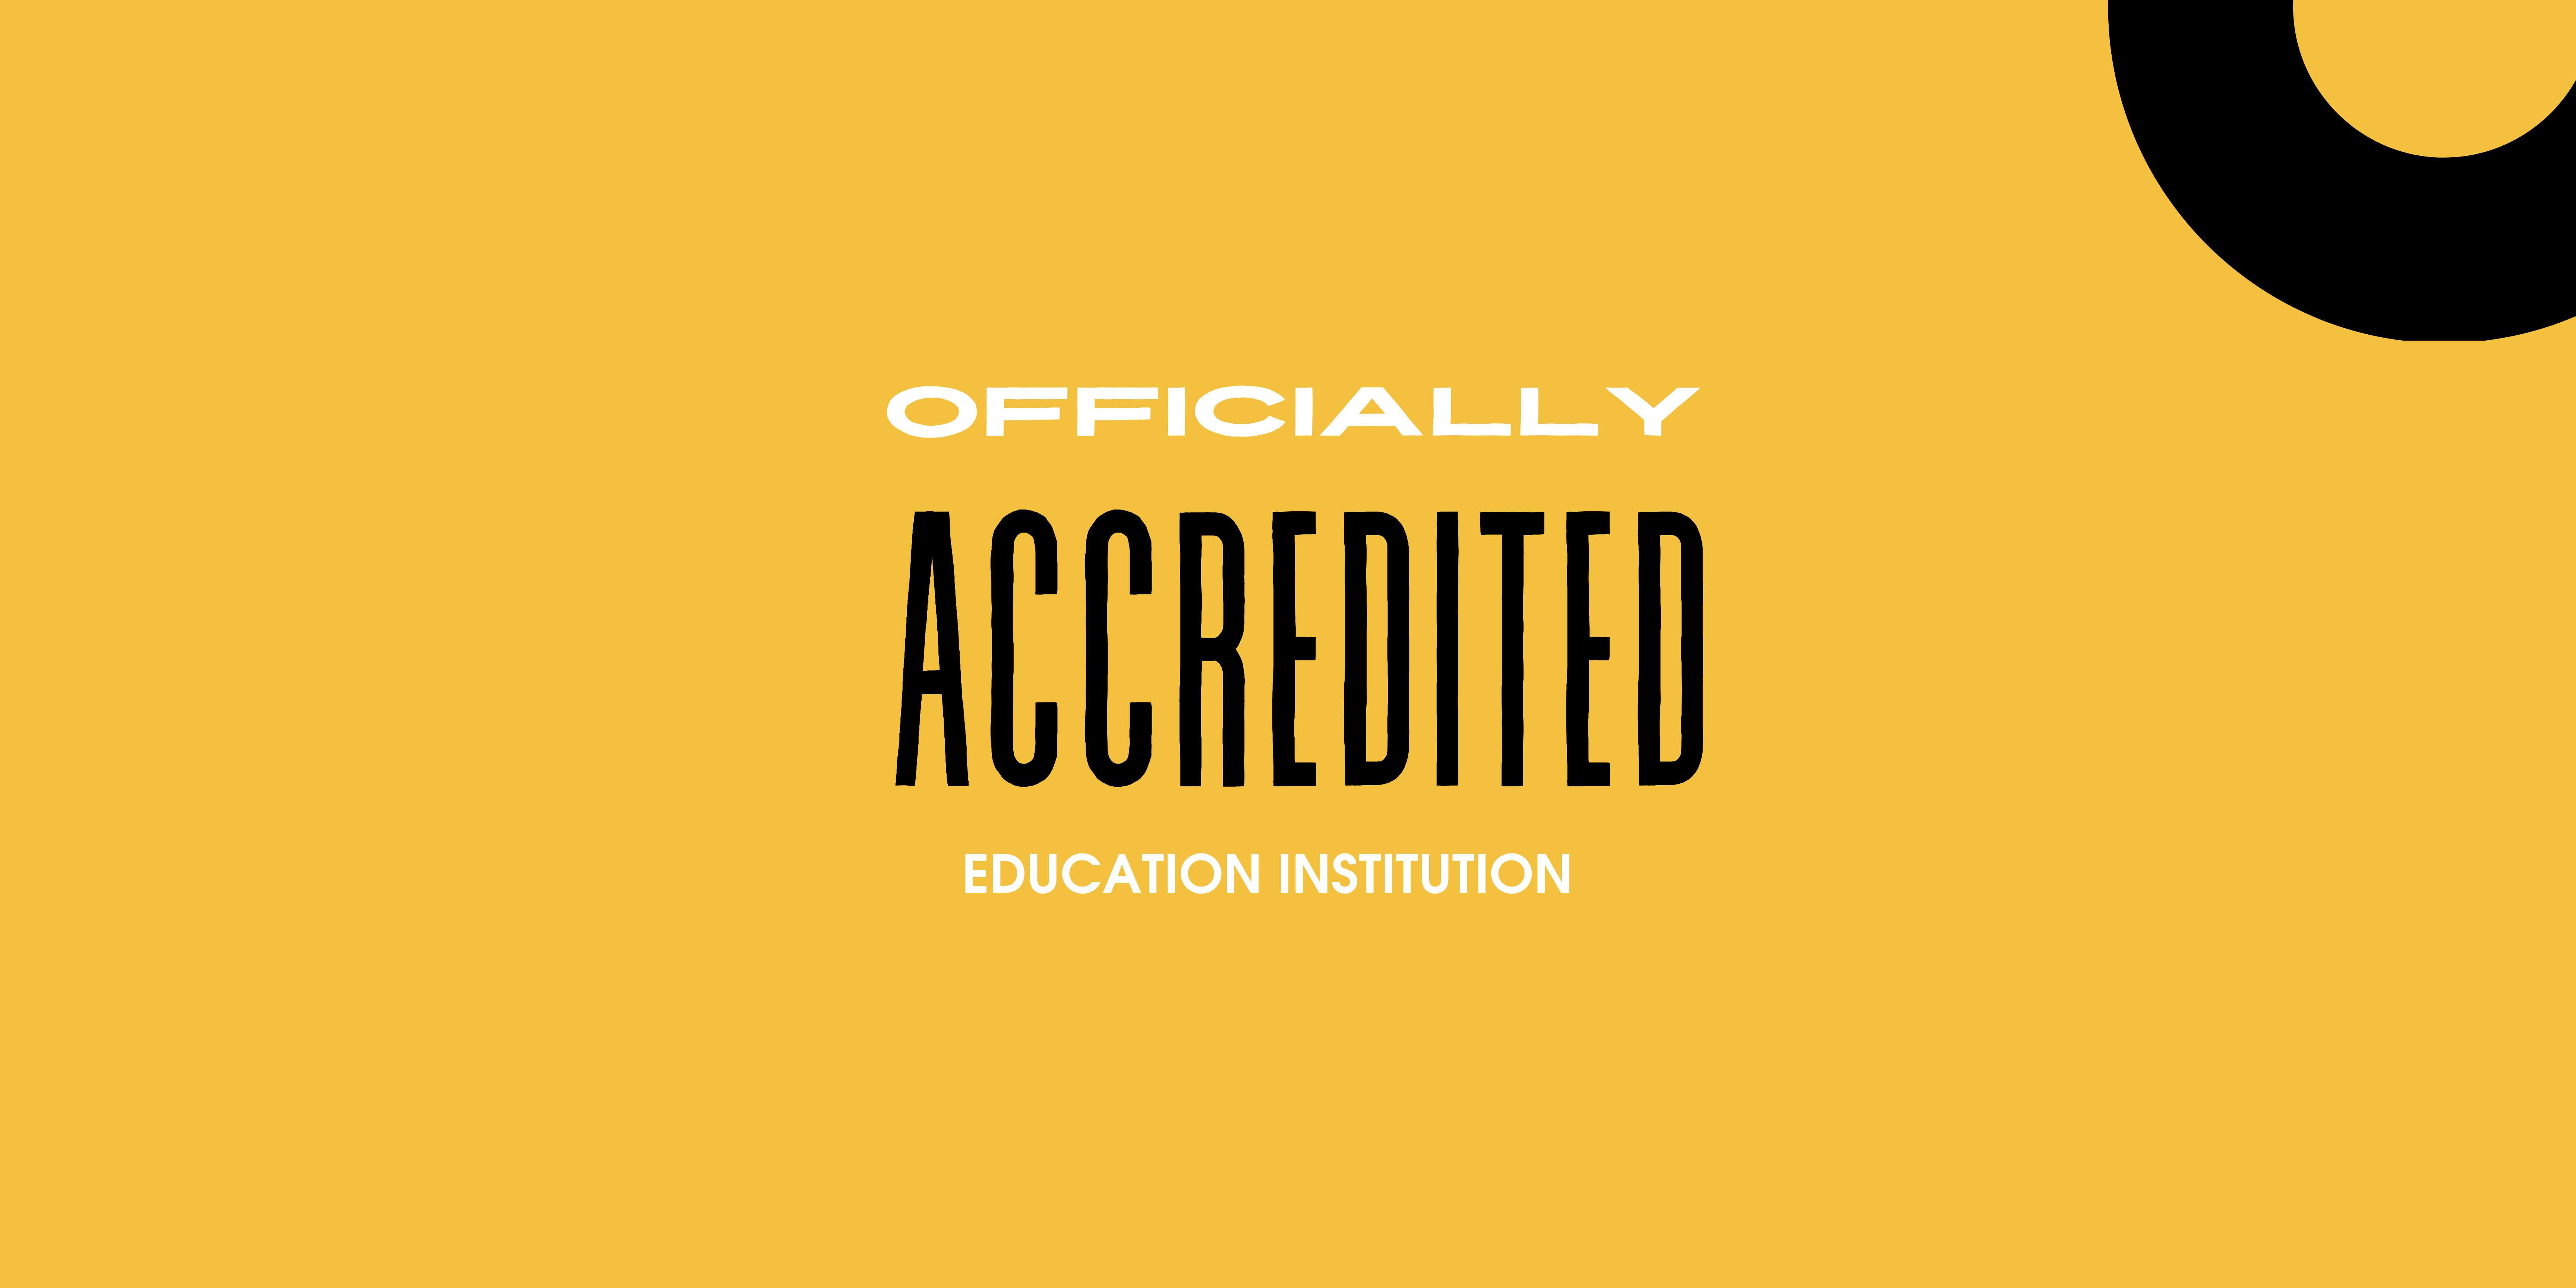 accreditation